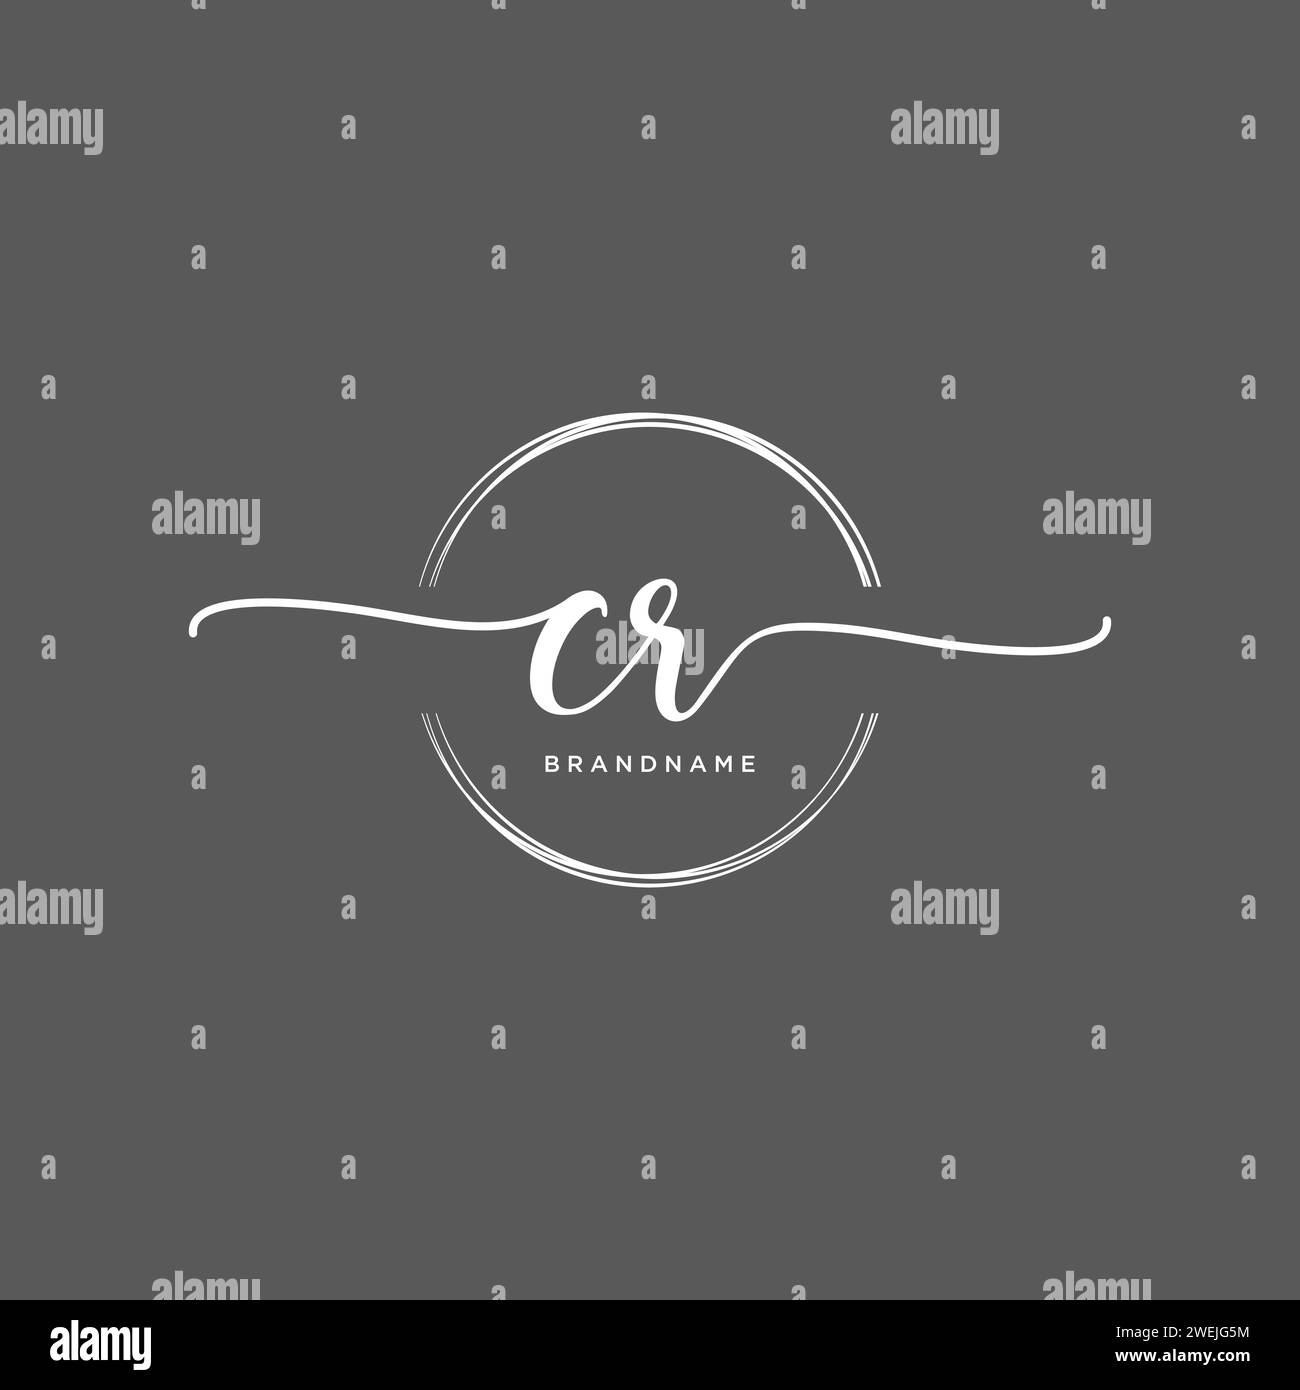 CR Initial handwriting logo with circle Stock Vector